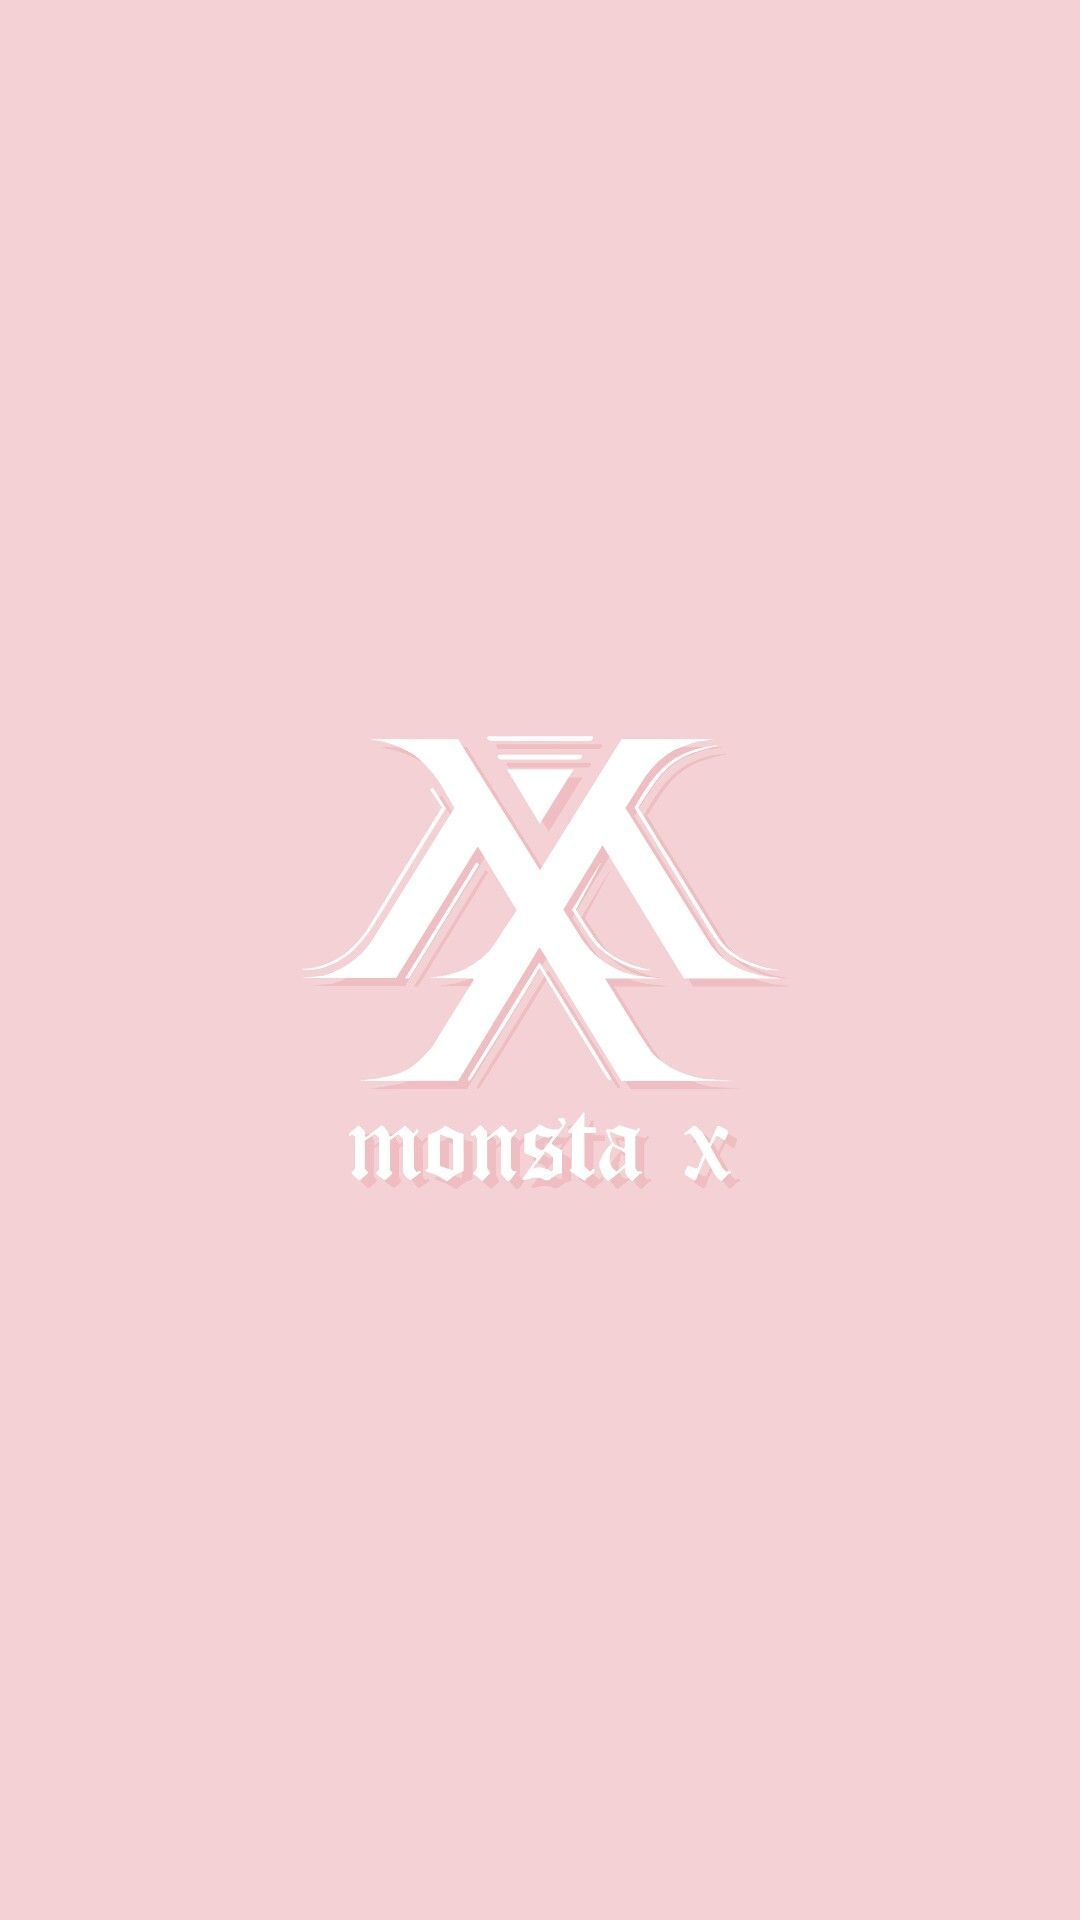 Image result for monsta x logo wallpaper. Monsta x, Wallpaper, Pink wallpaper iphone